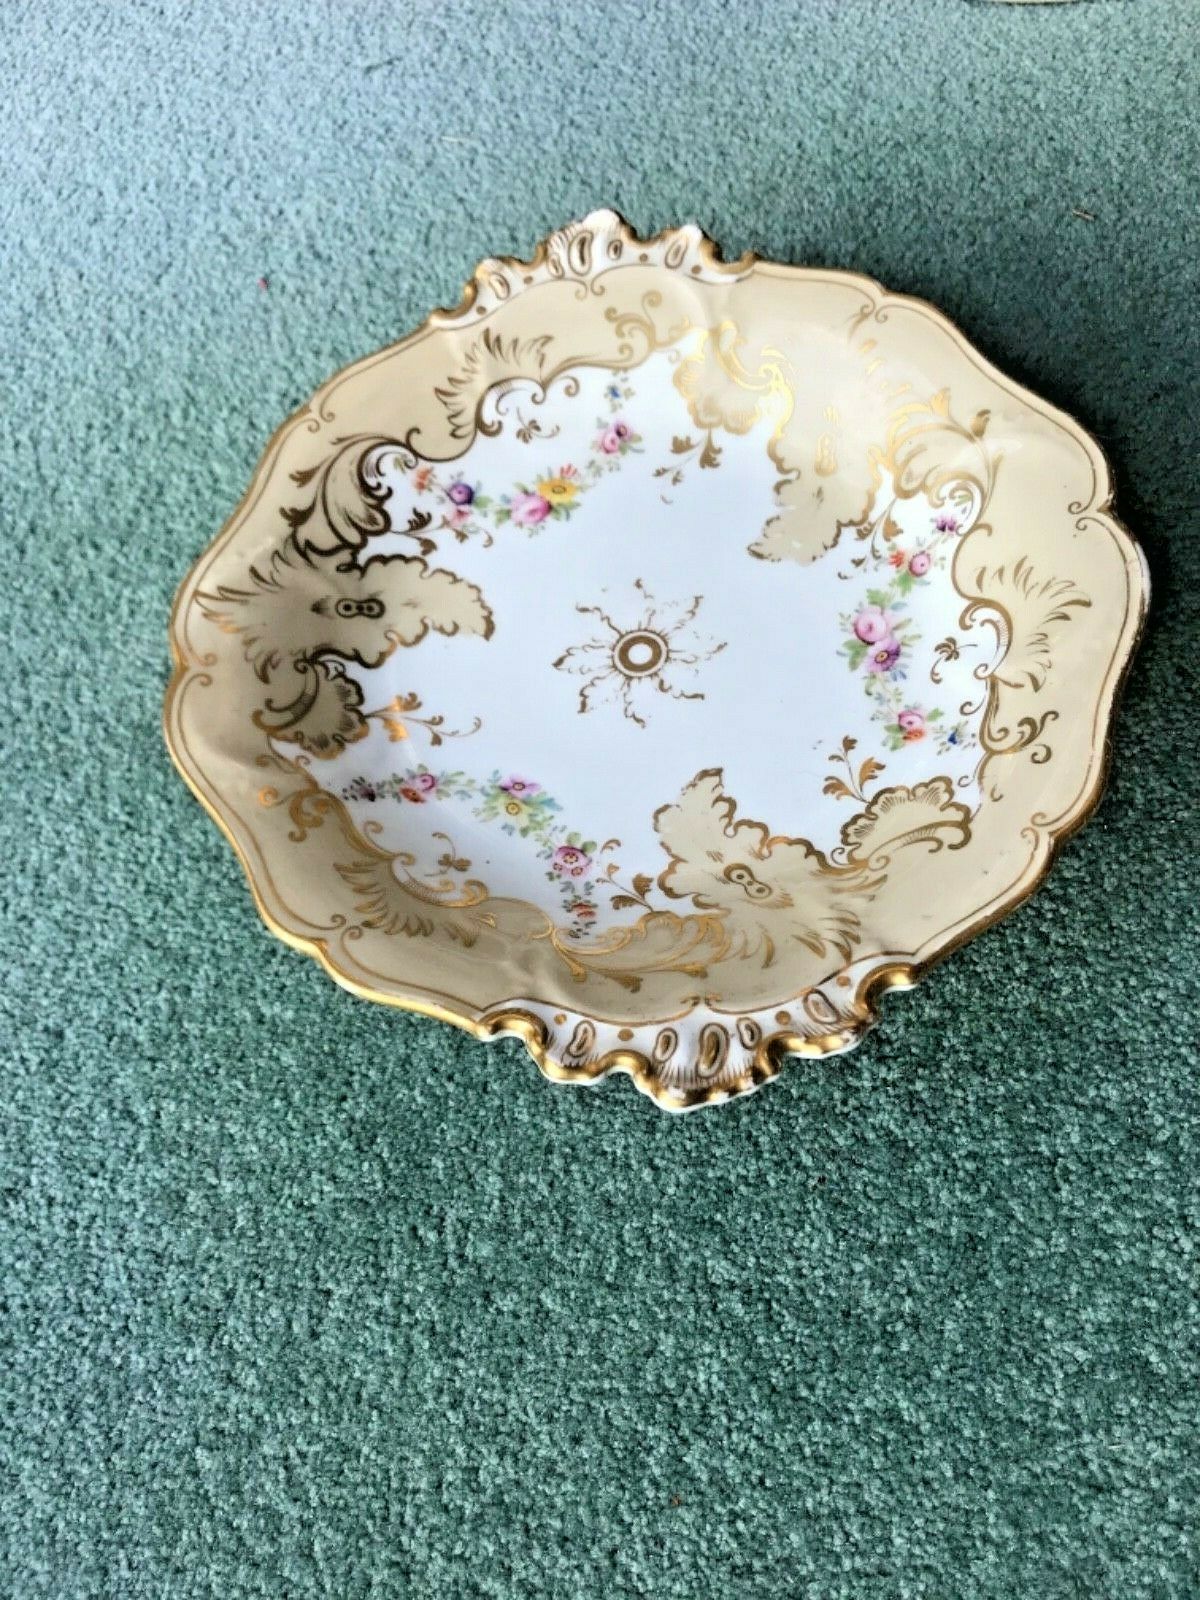 19th 1840s Ridgway porcelain platter no 8676 Adelaide & Gold star Burton shape